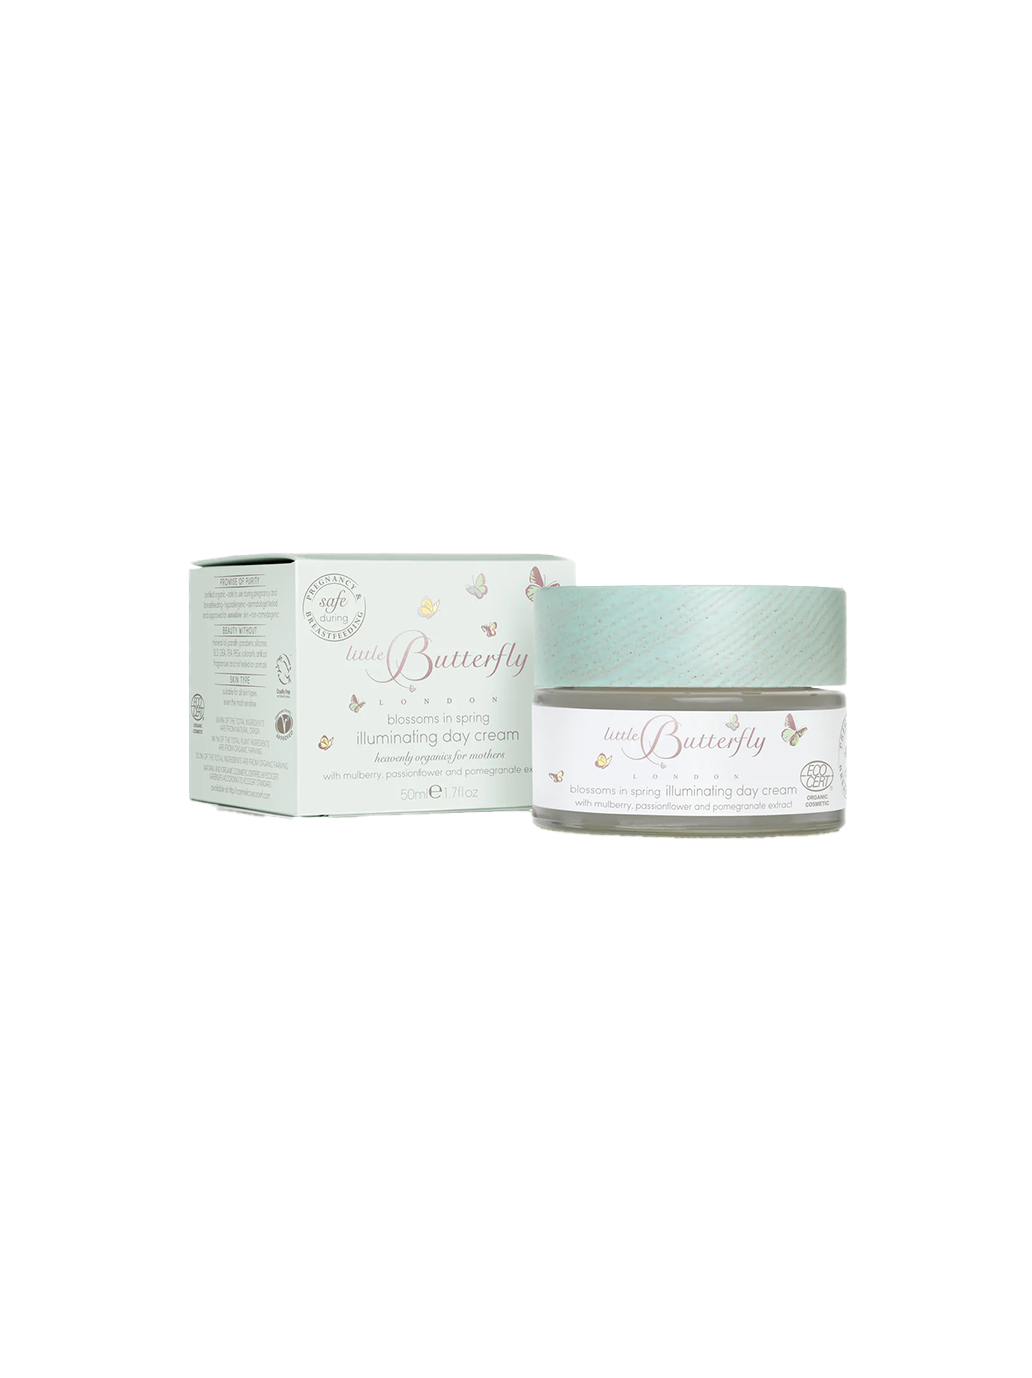 Illuminating day cream safe during pregnancy